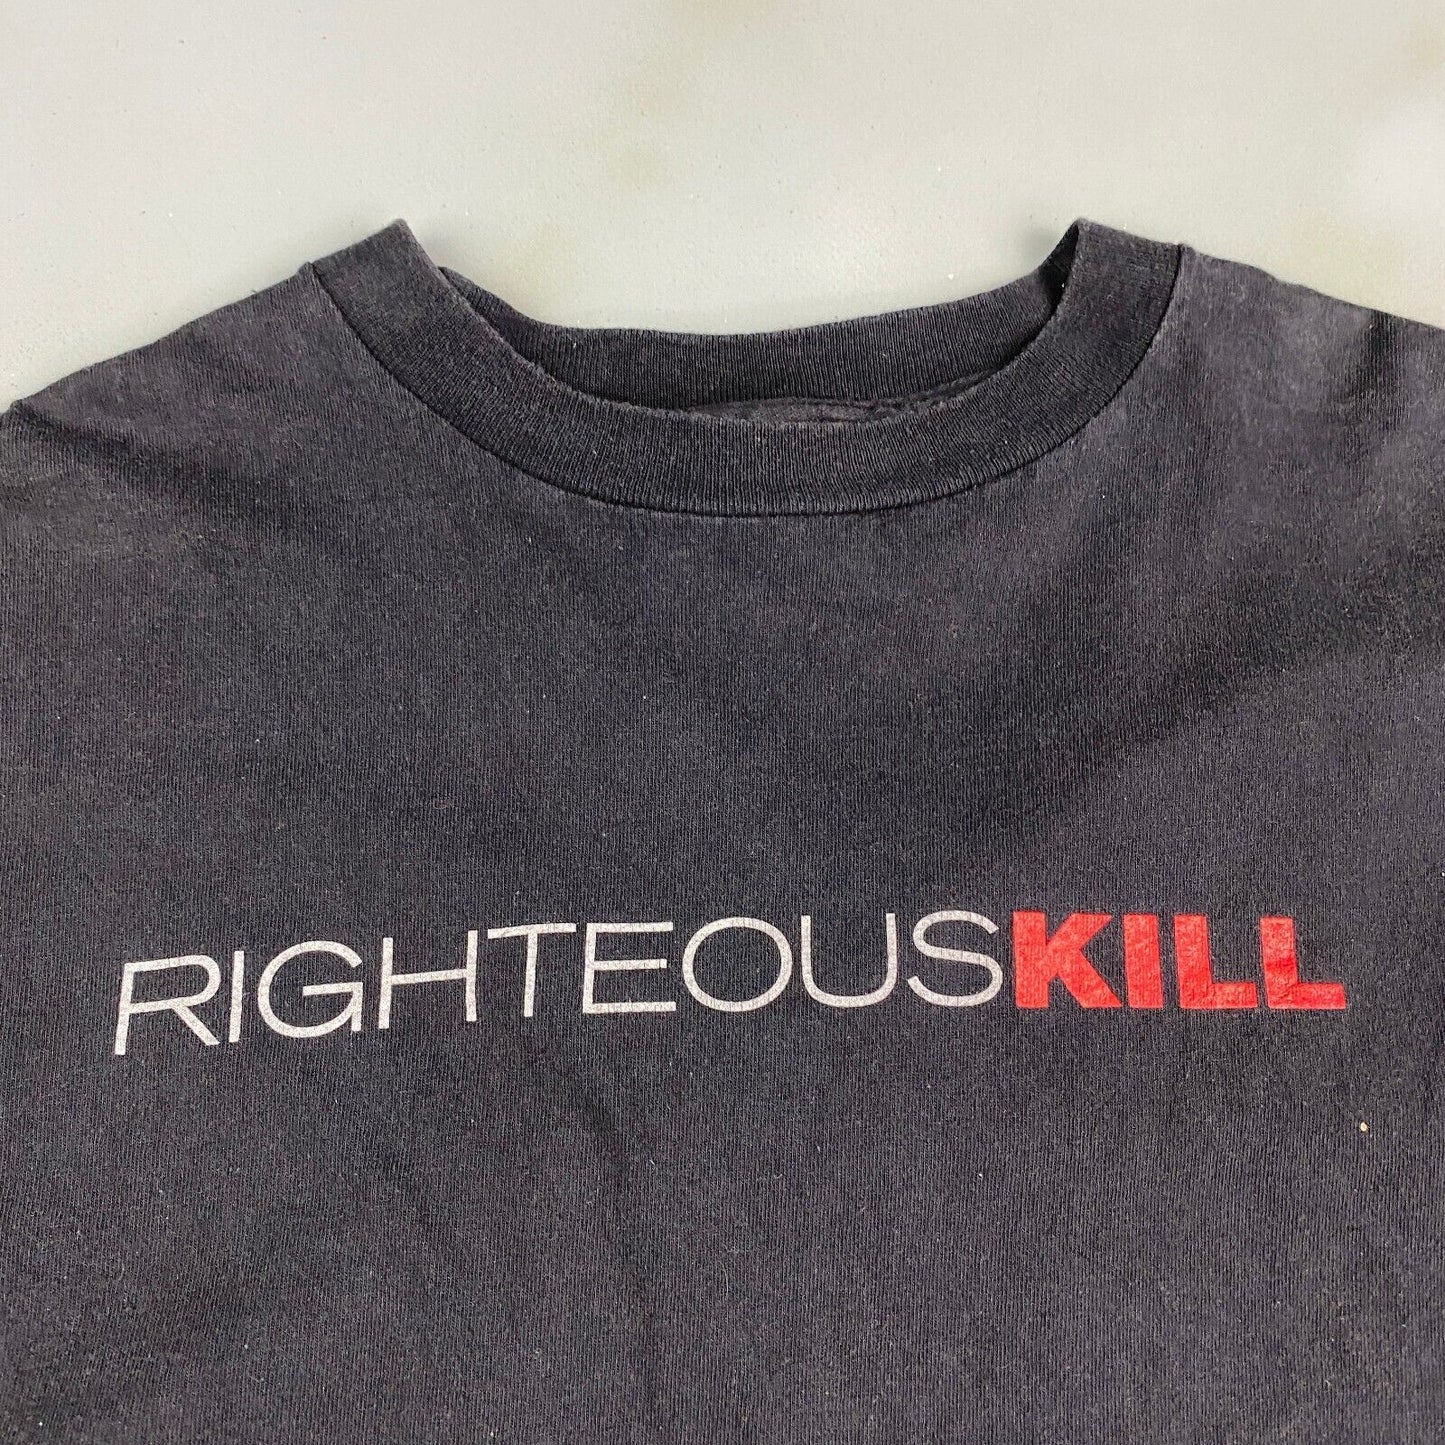 Vintage Righteous Kill Black T-Shirt sz Large Men Adult